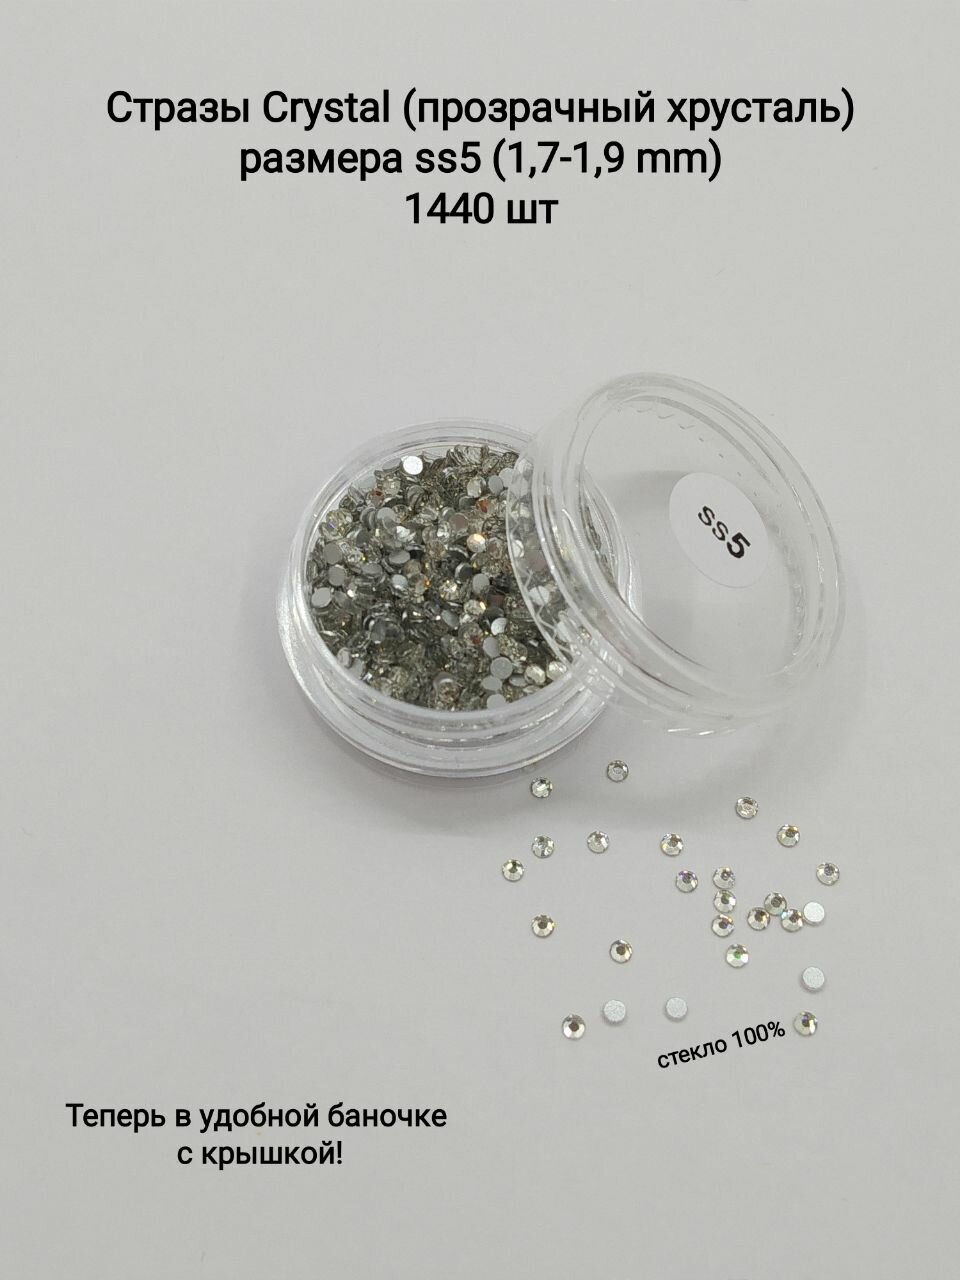 NailsCrystals, Стразы Crystal (прозрачные), ss5, 1440 шт